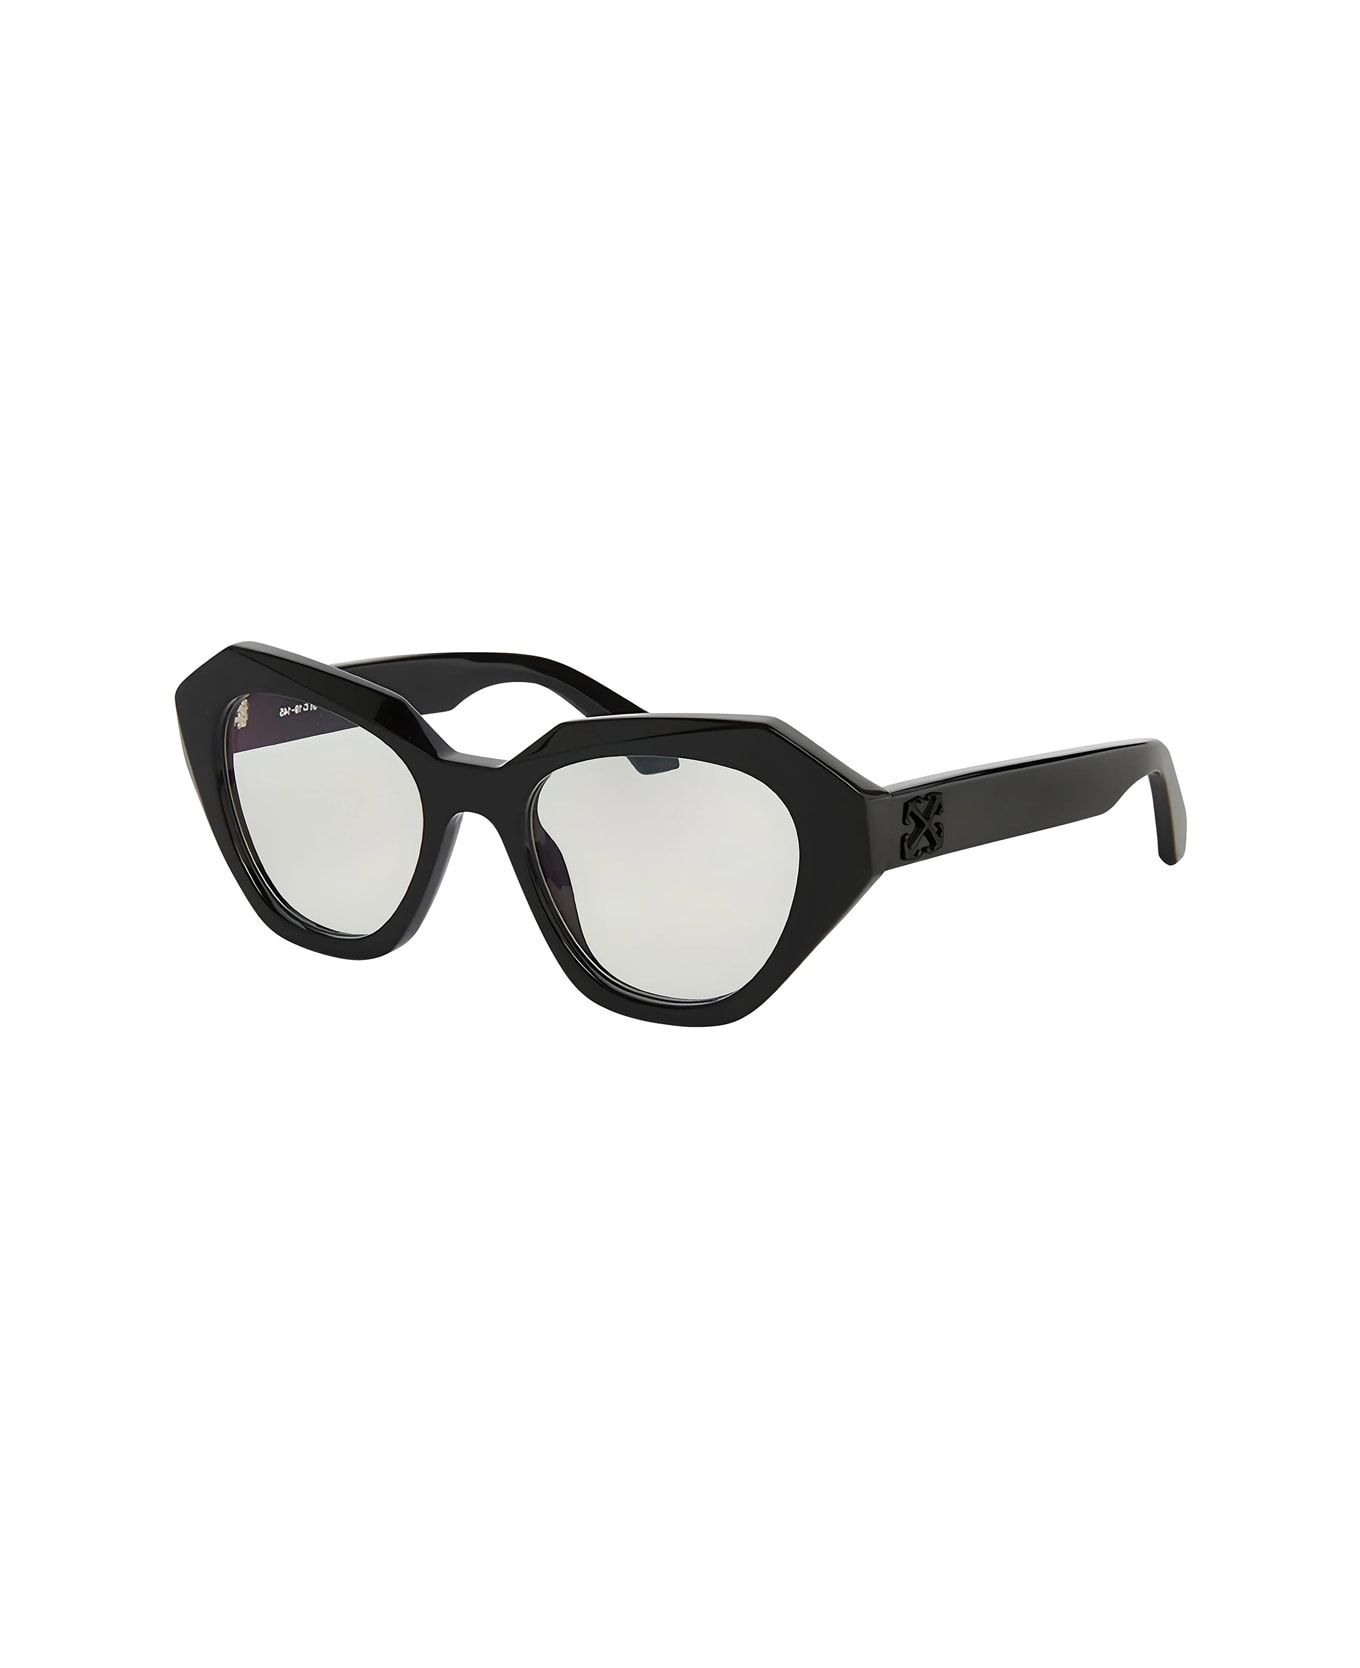 Off-White Off White Oerj074 Style 74 1000 Black Glasses - Nero